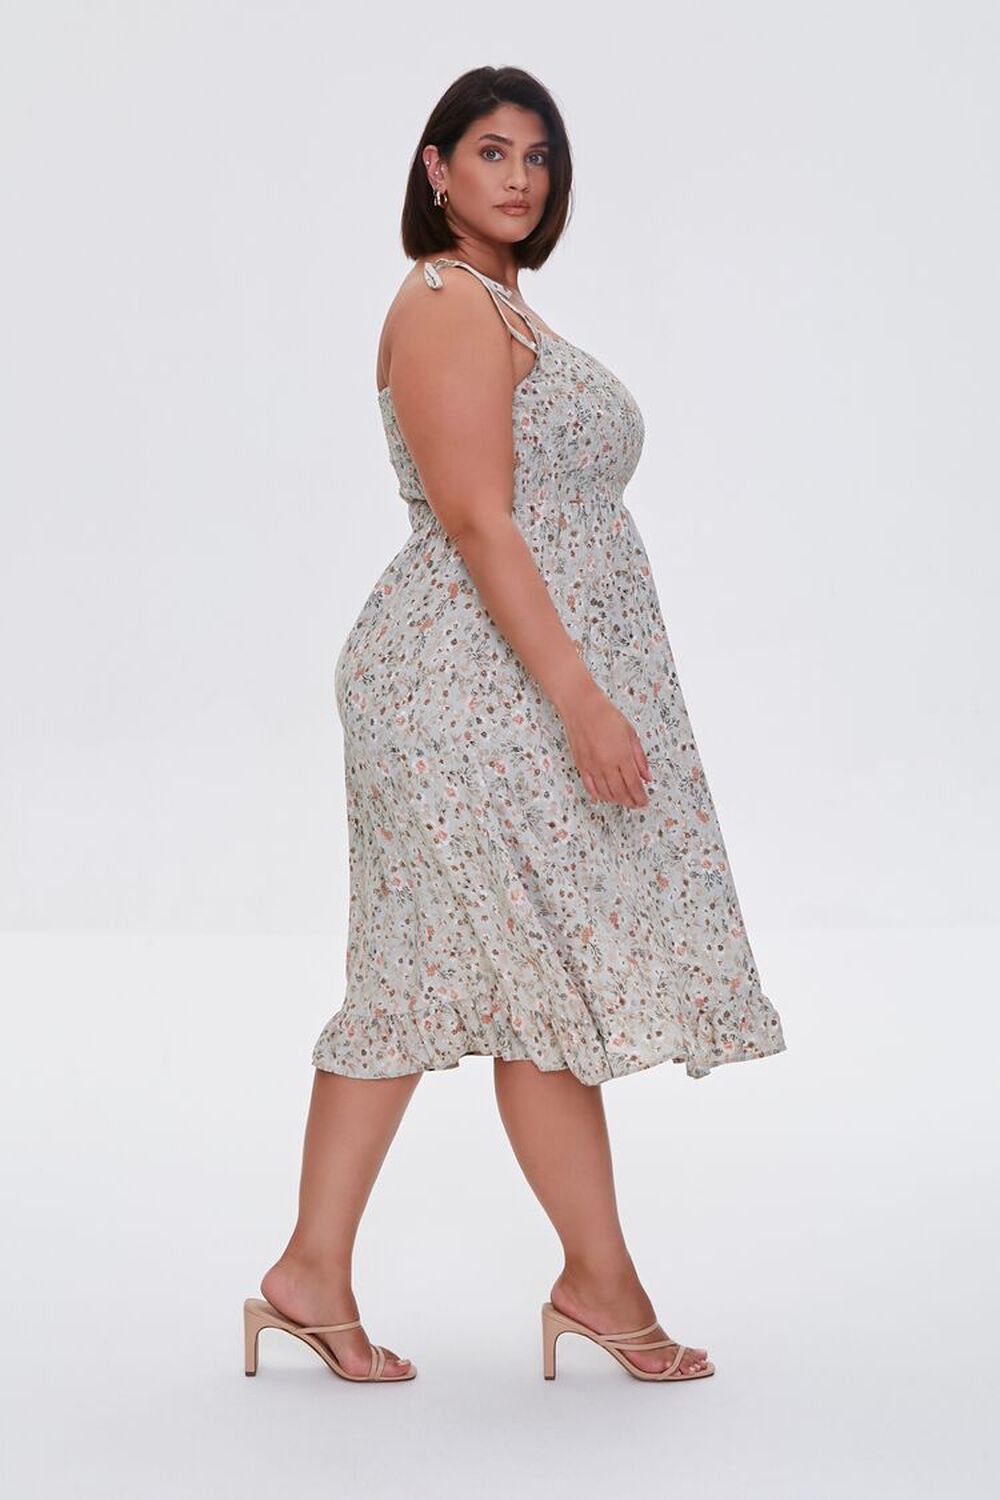 SAGE/MULTI Plus Size Floral Print Dress, image 2